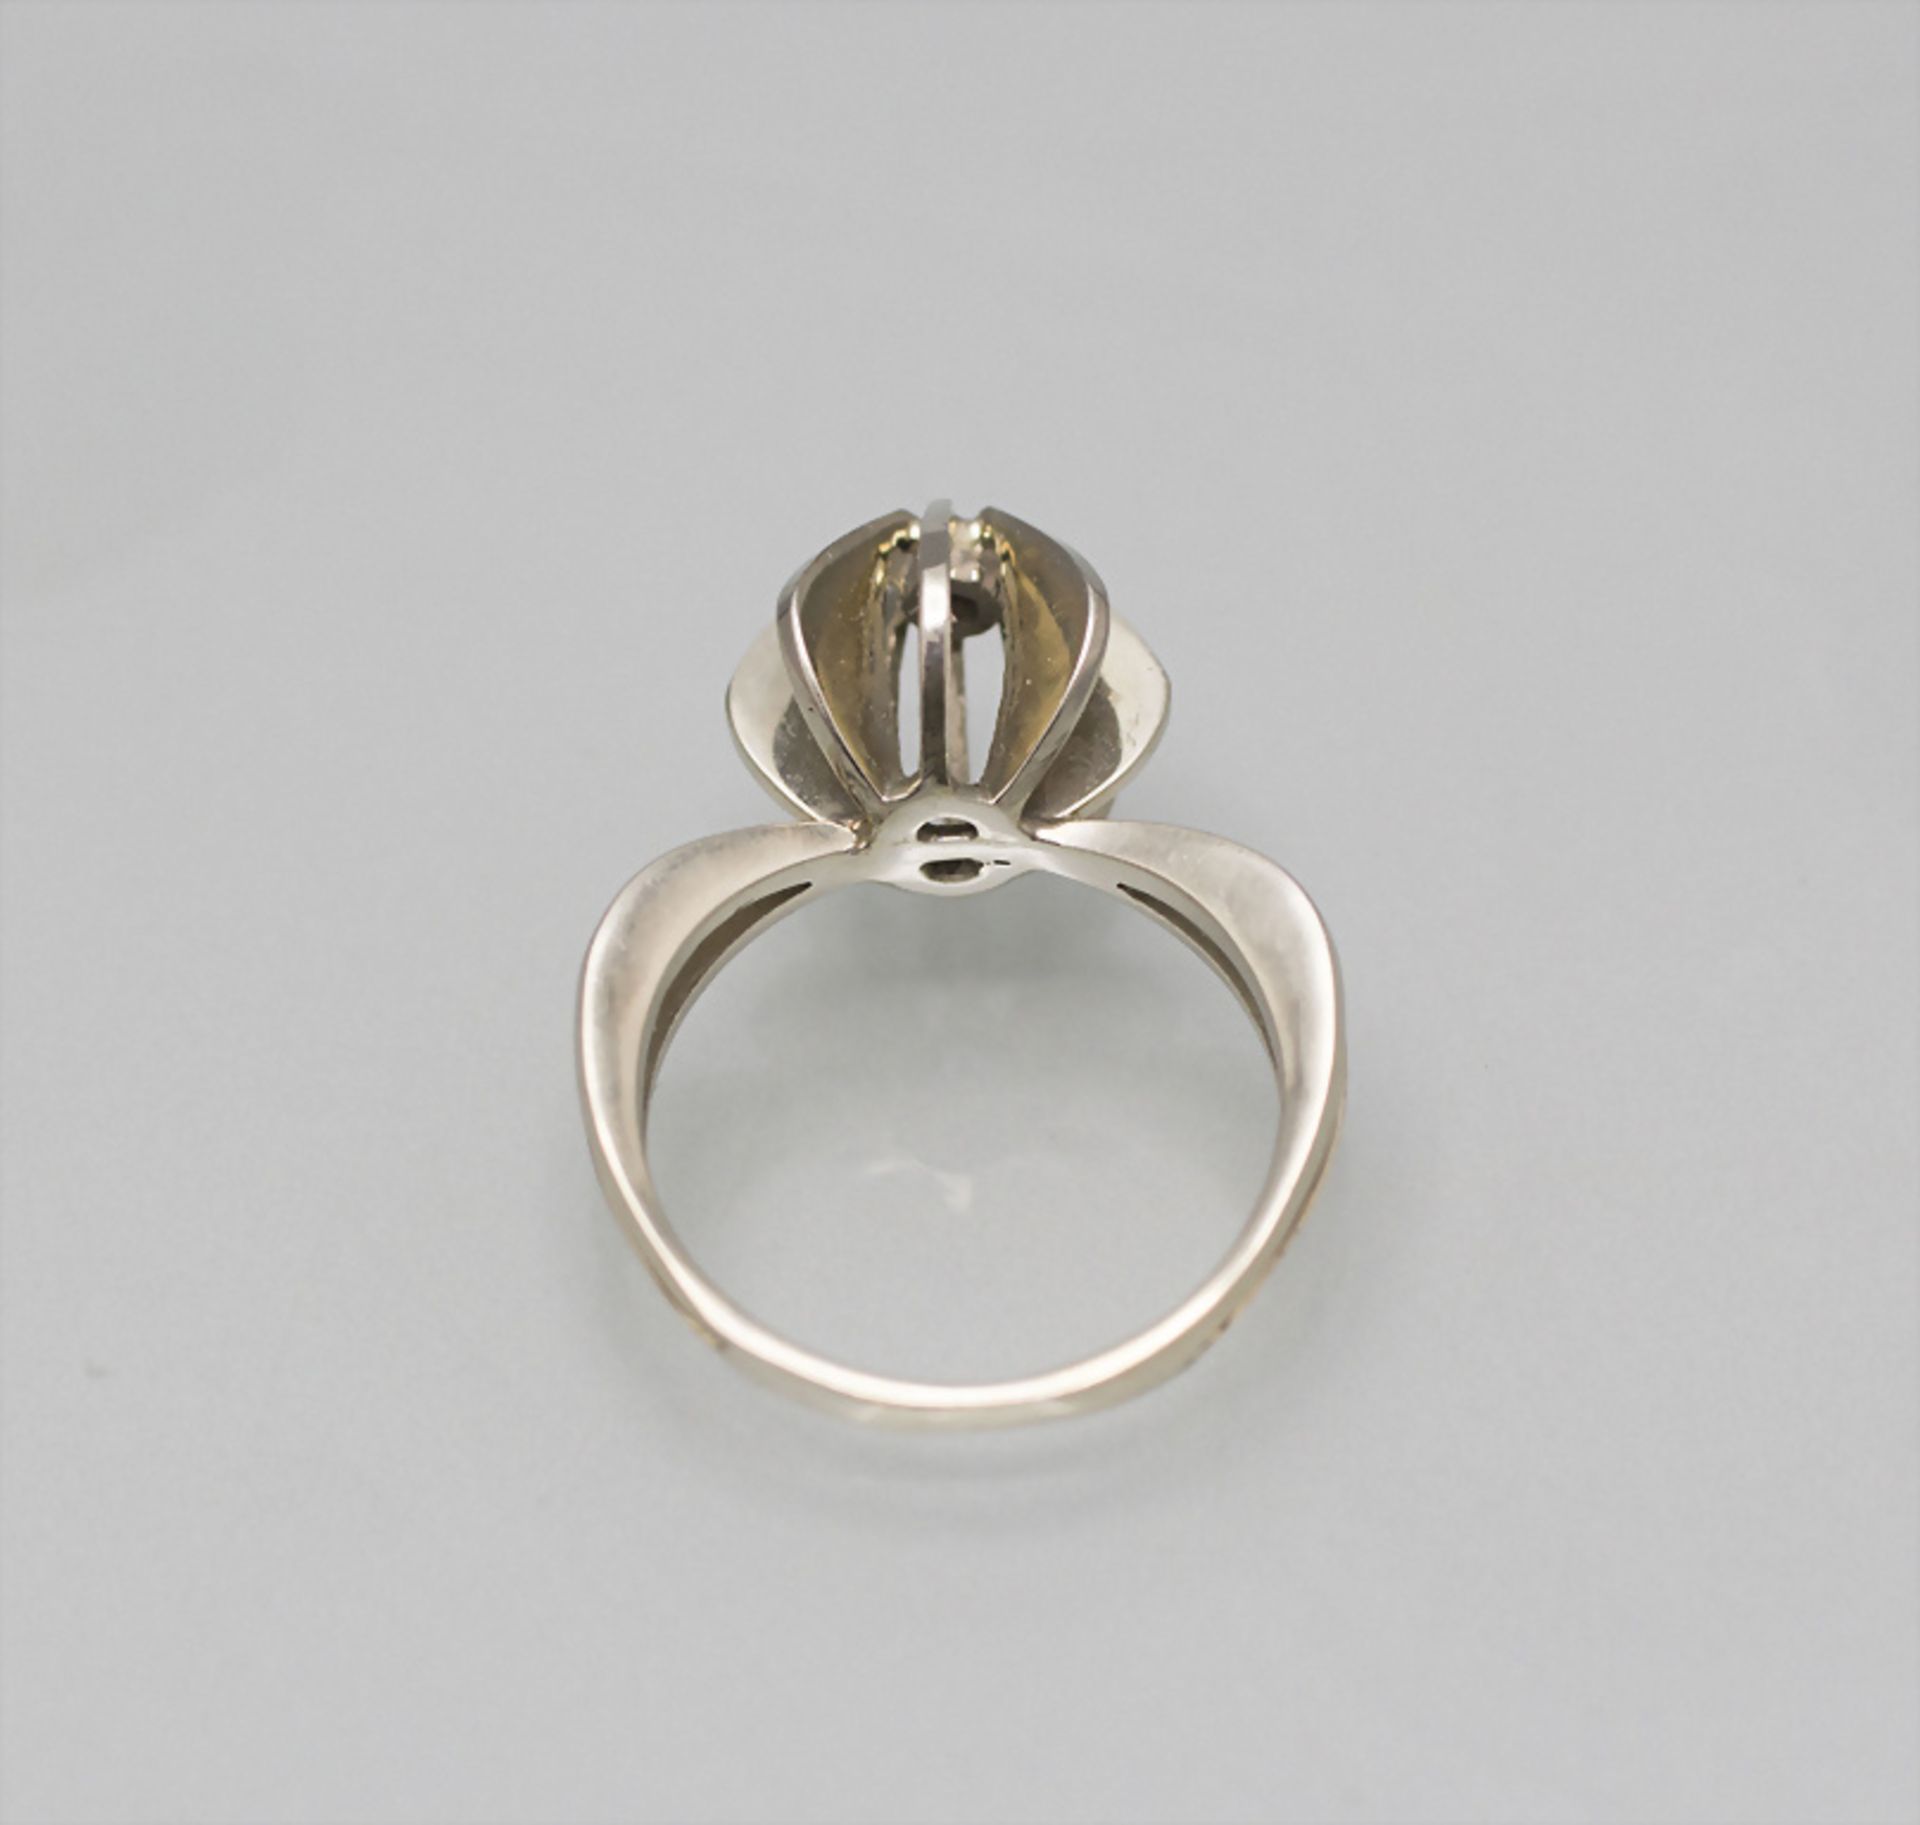 Damenring mit Brillant / A ladies 18 ct gold ring with diamond - Bild 4 aus 4